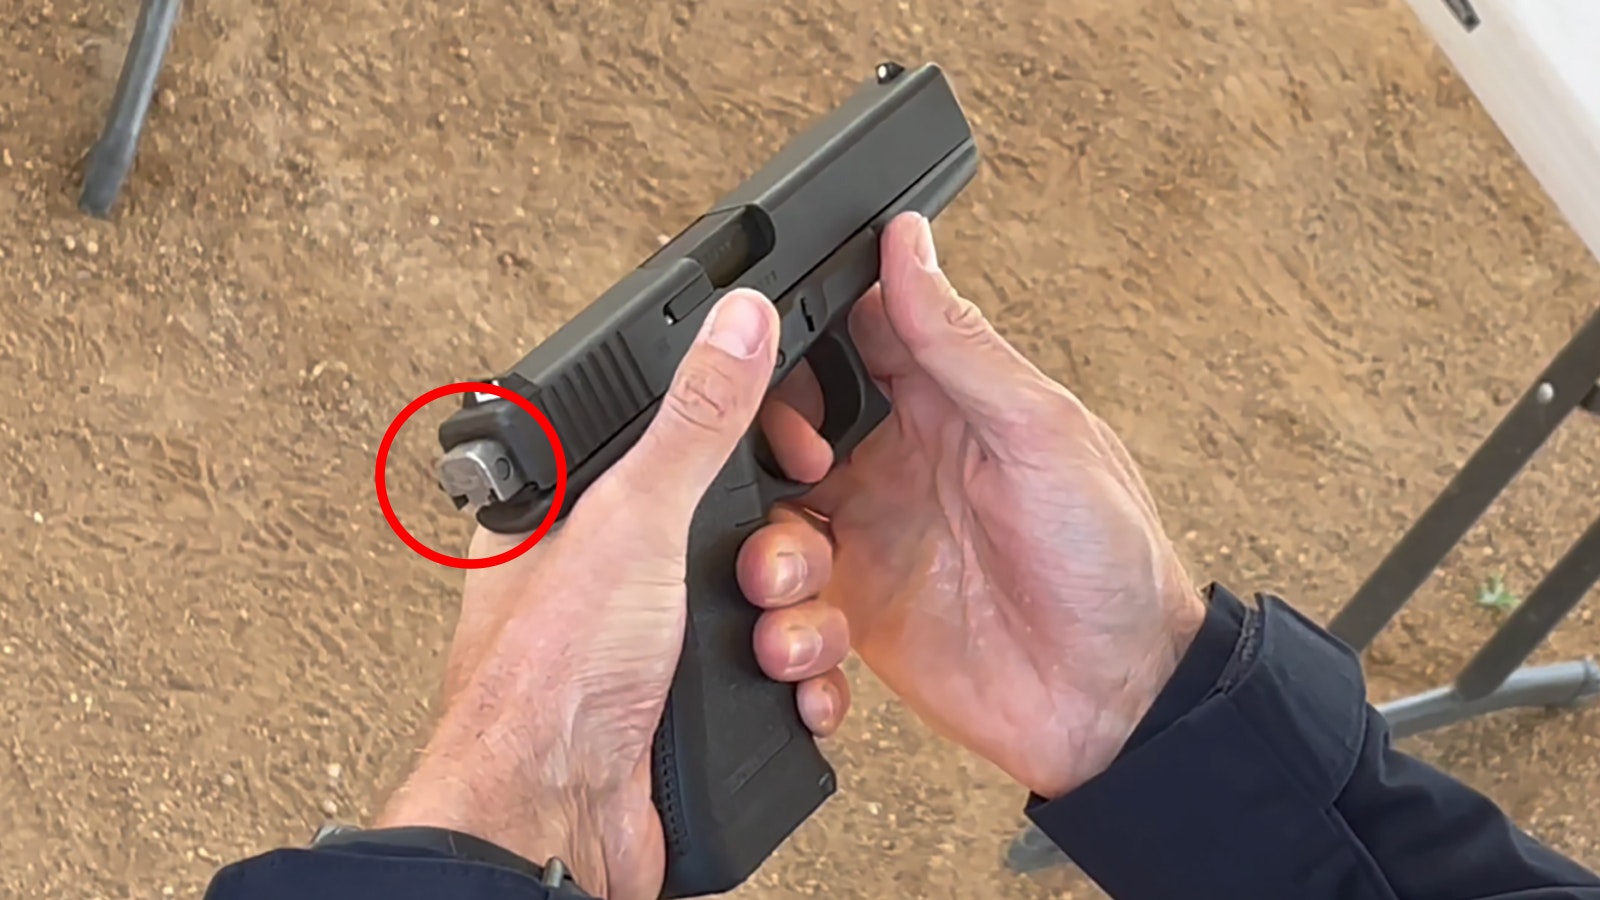 A Glock Switch is a device that turns a Glock pistol into a rapid-fire firearm.